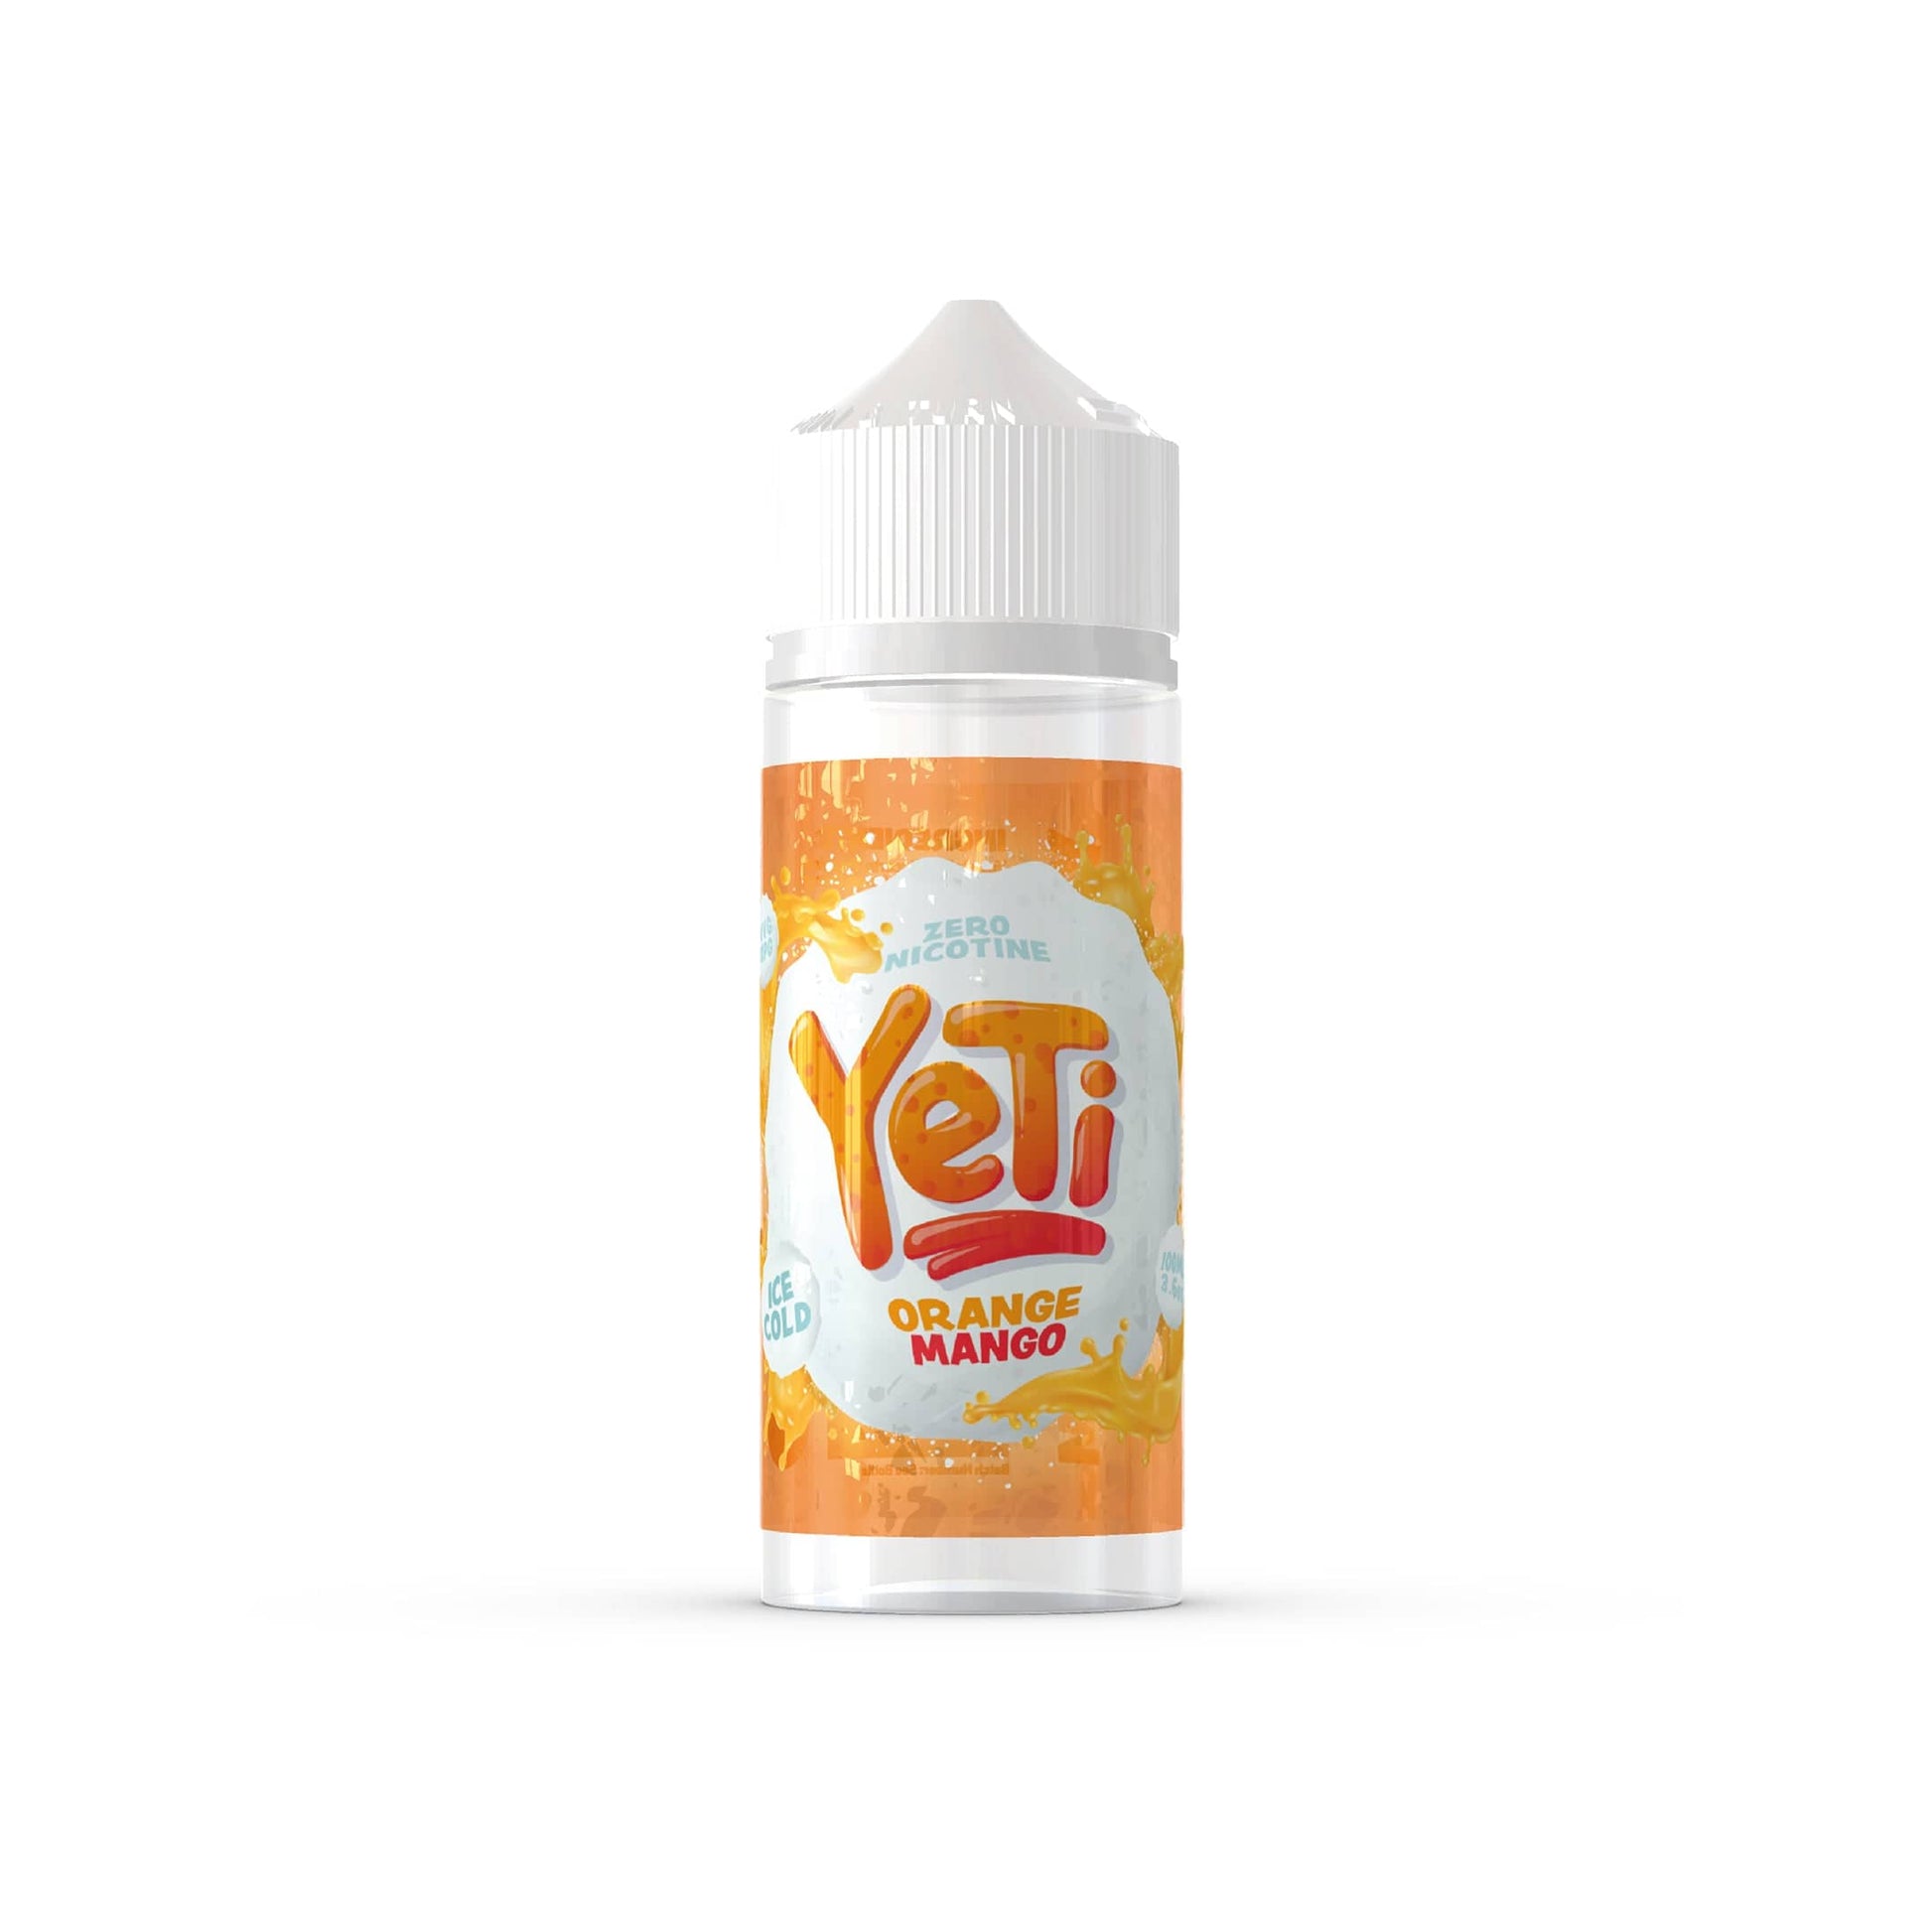 YETI E-Liquid Shortfill Eliquids Orange Mango Yeti Ice Cold 100ml Shortfill E-Liquid